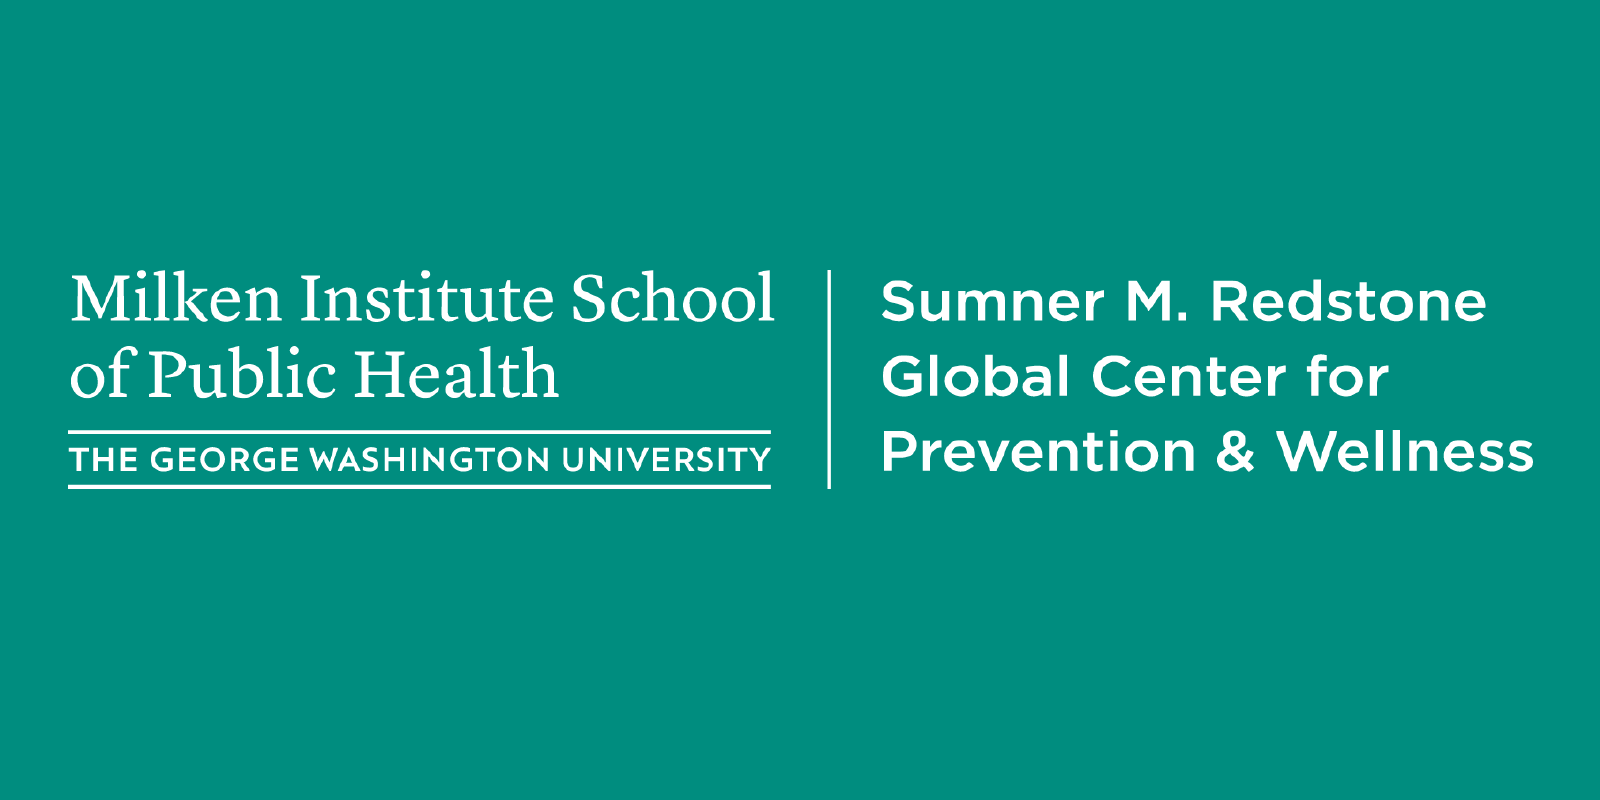 Milken Institute School of Public Health, Sumner M. Redstone Global Center for Prevention and Wellness